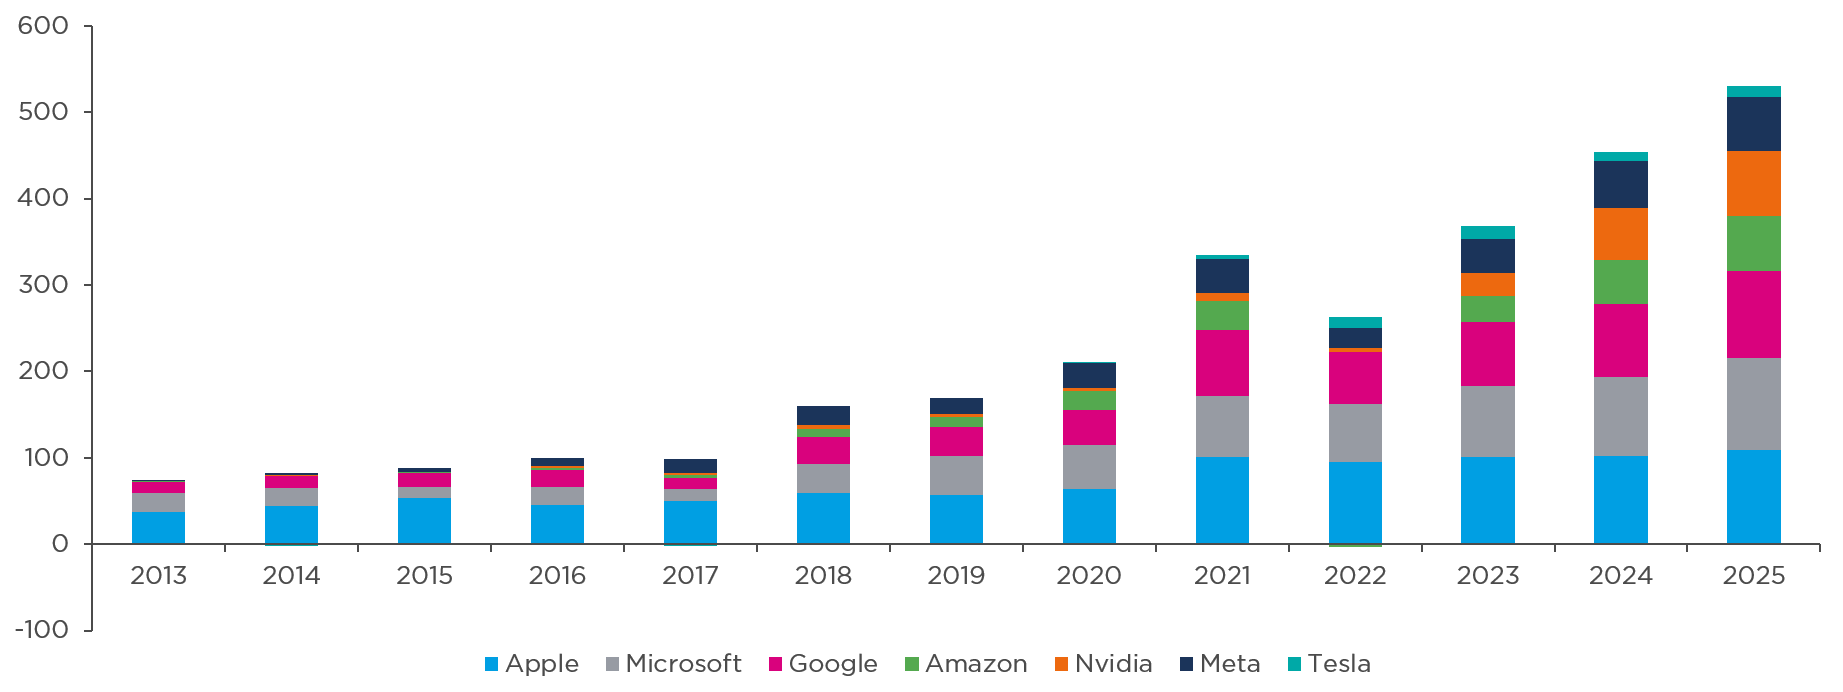 Graph showing annual net profit of tech companies